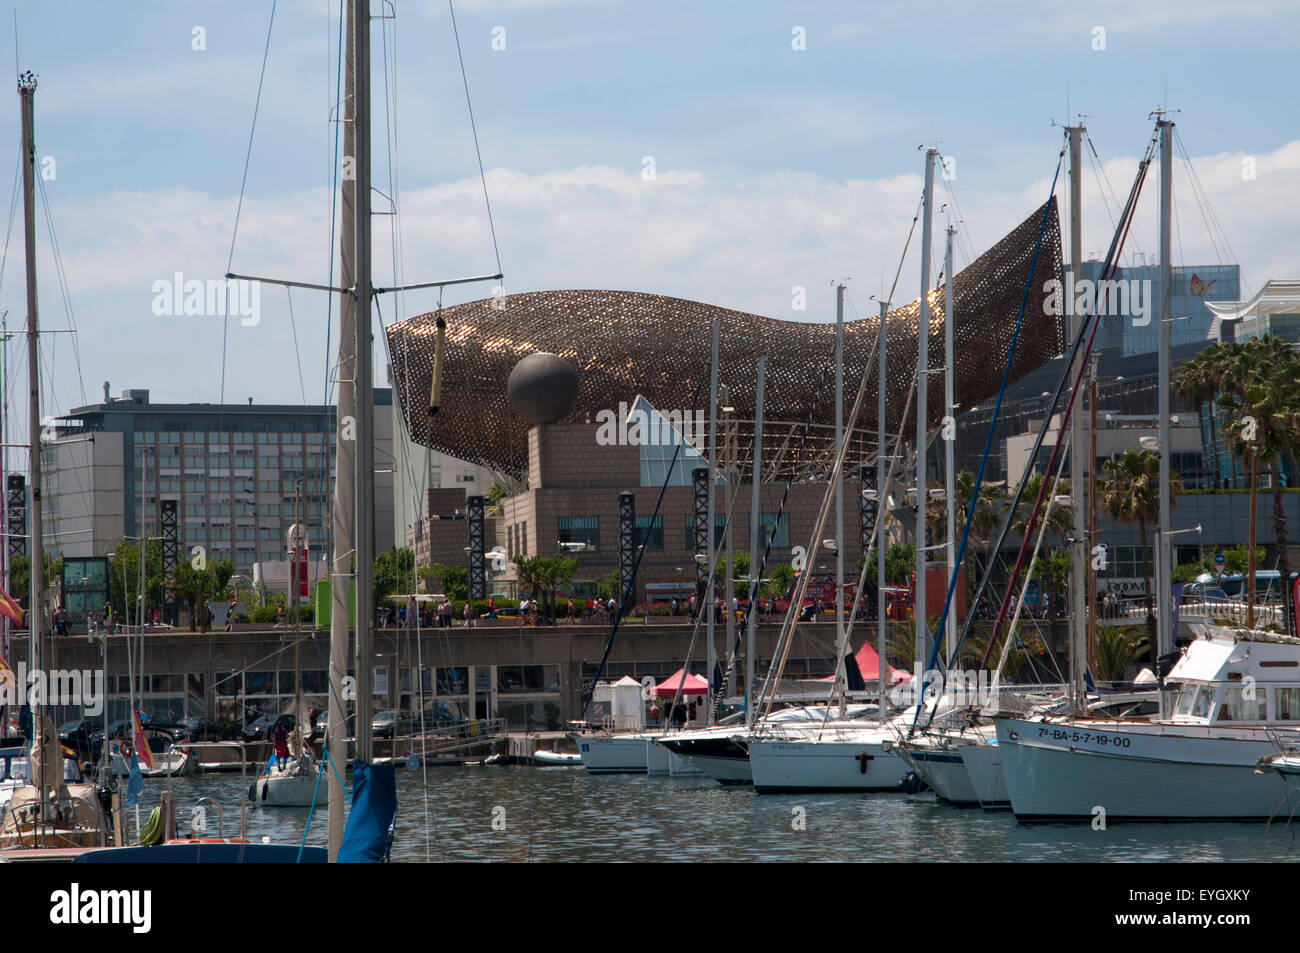 Peix d' Or, Port Olimpic, Barcelona Stock Photo